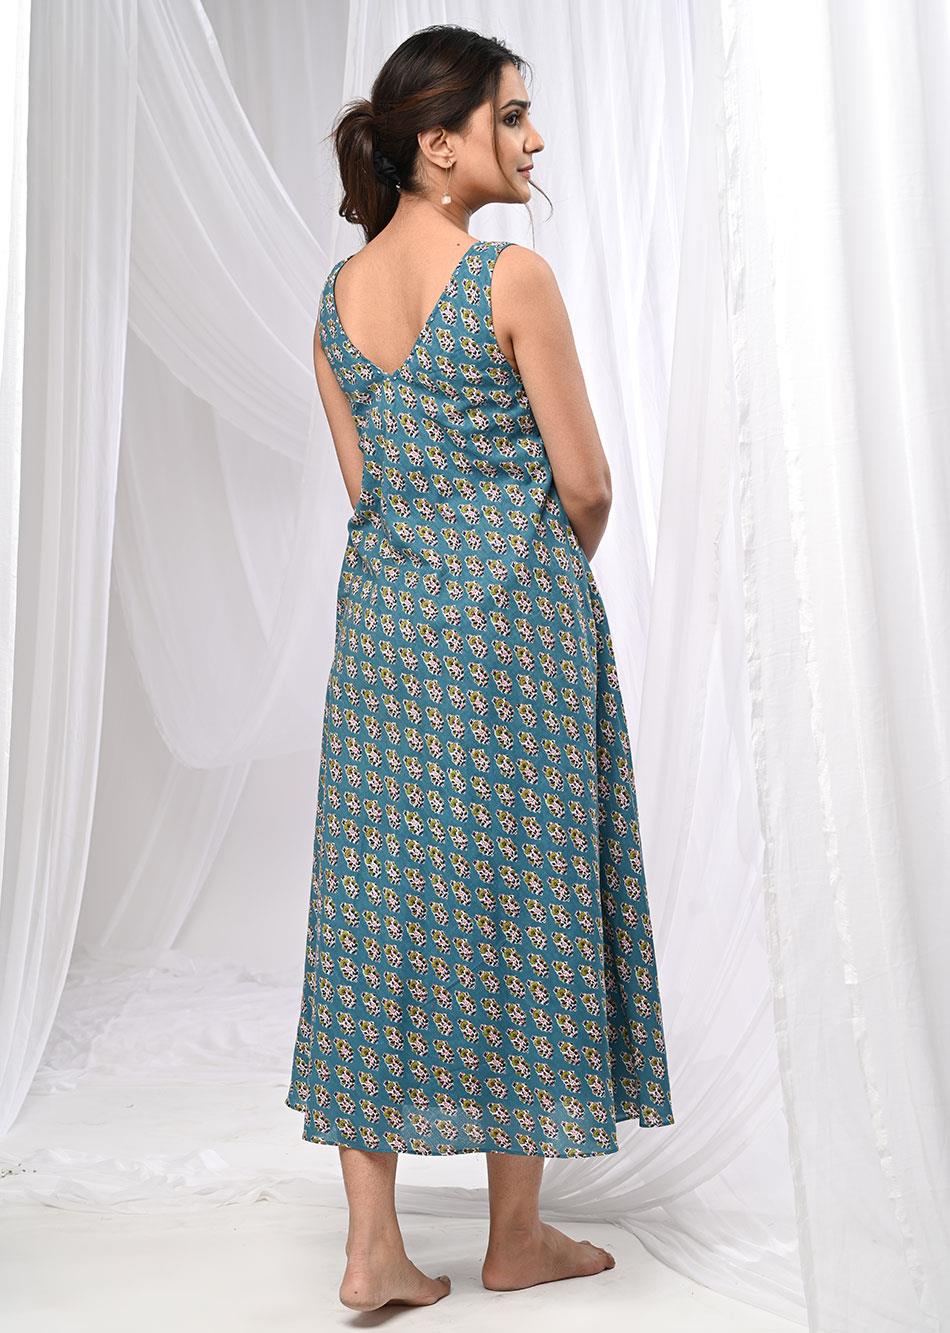 Fulwari Printed Dress By Jovi Fashion